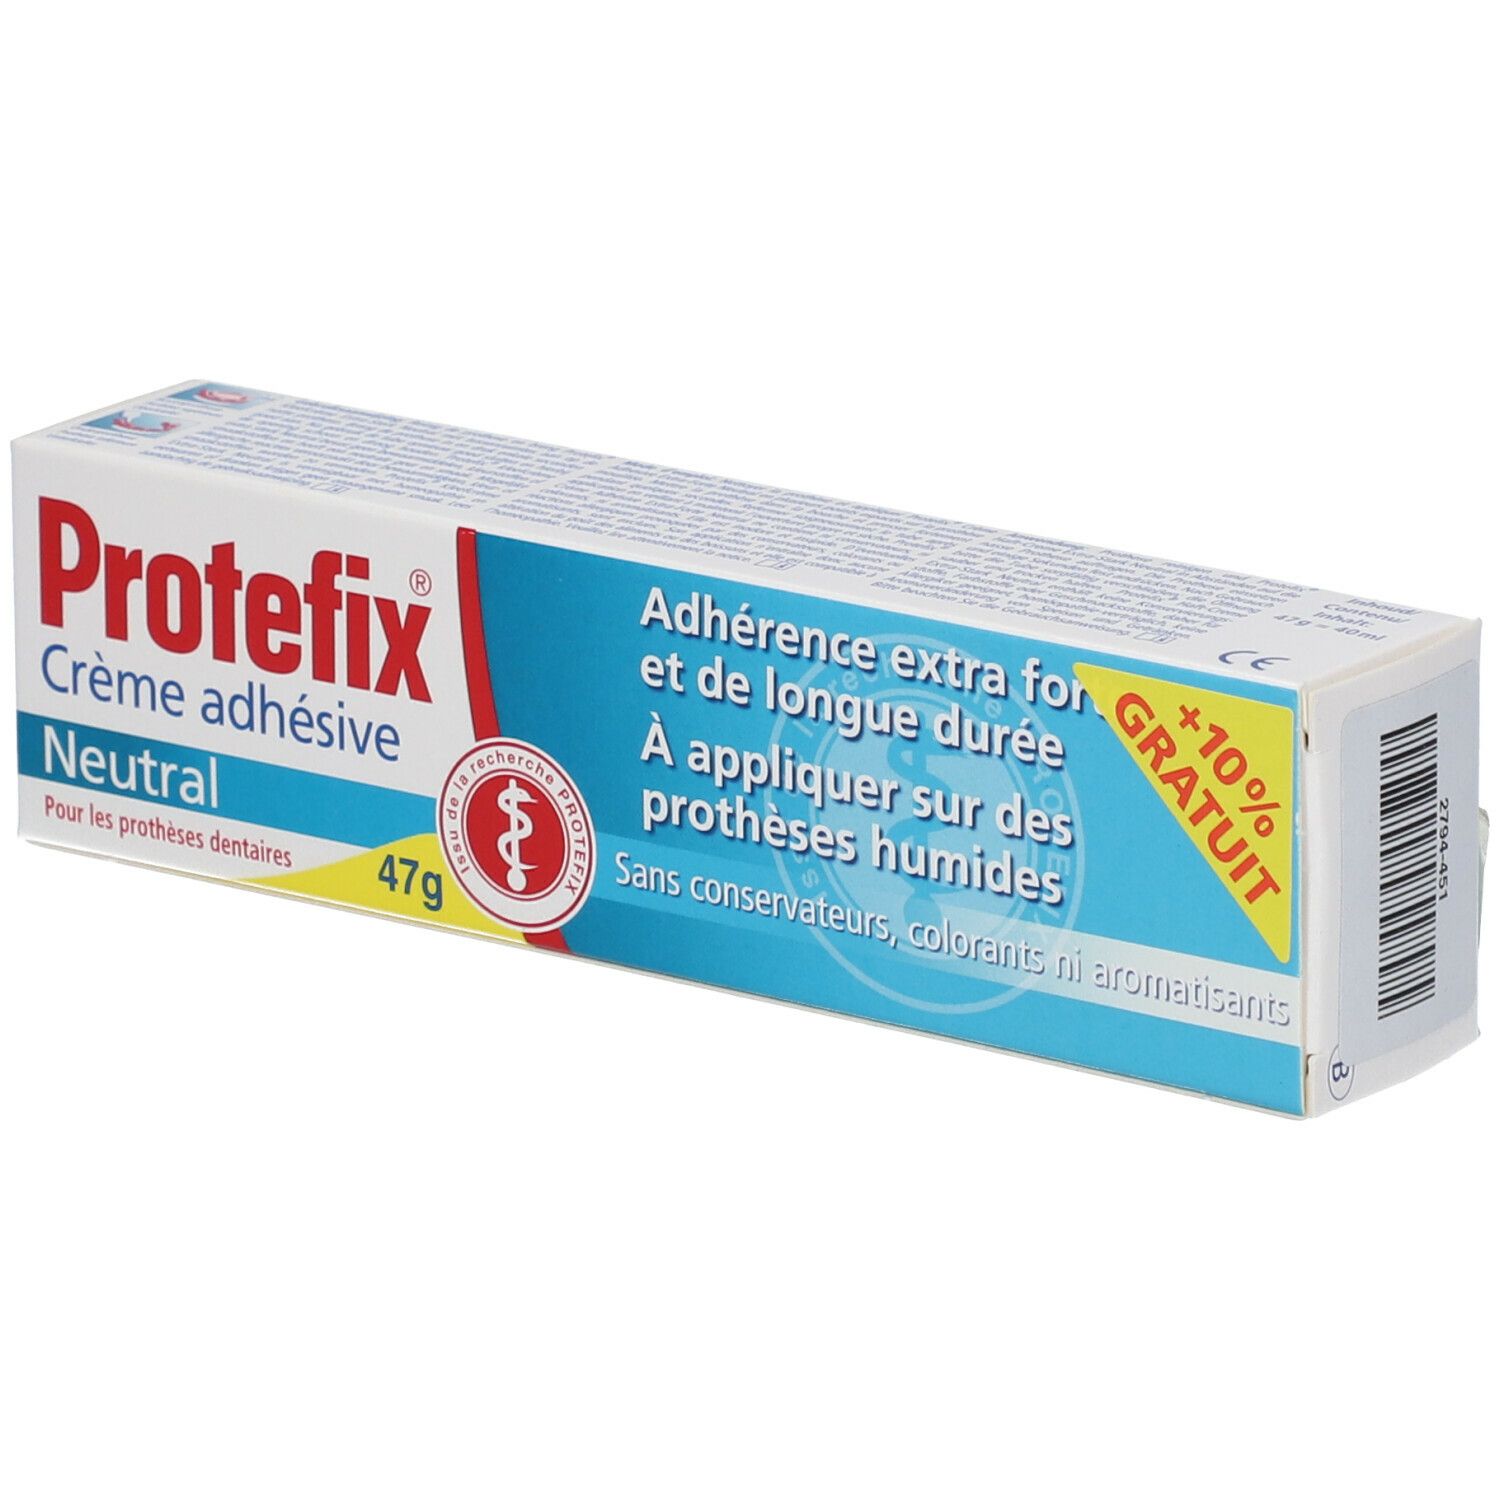 Protefix® Crème adhésive Neutral + 10 % offert